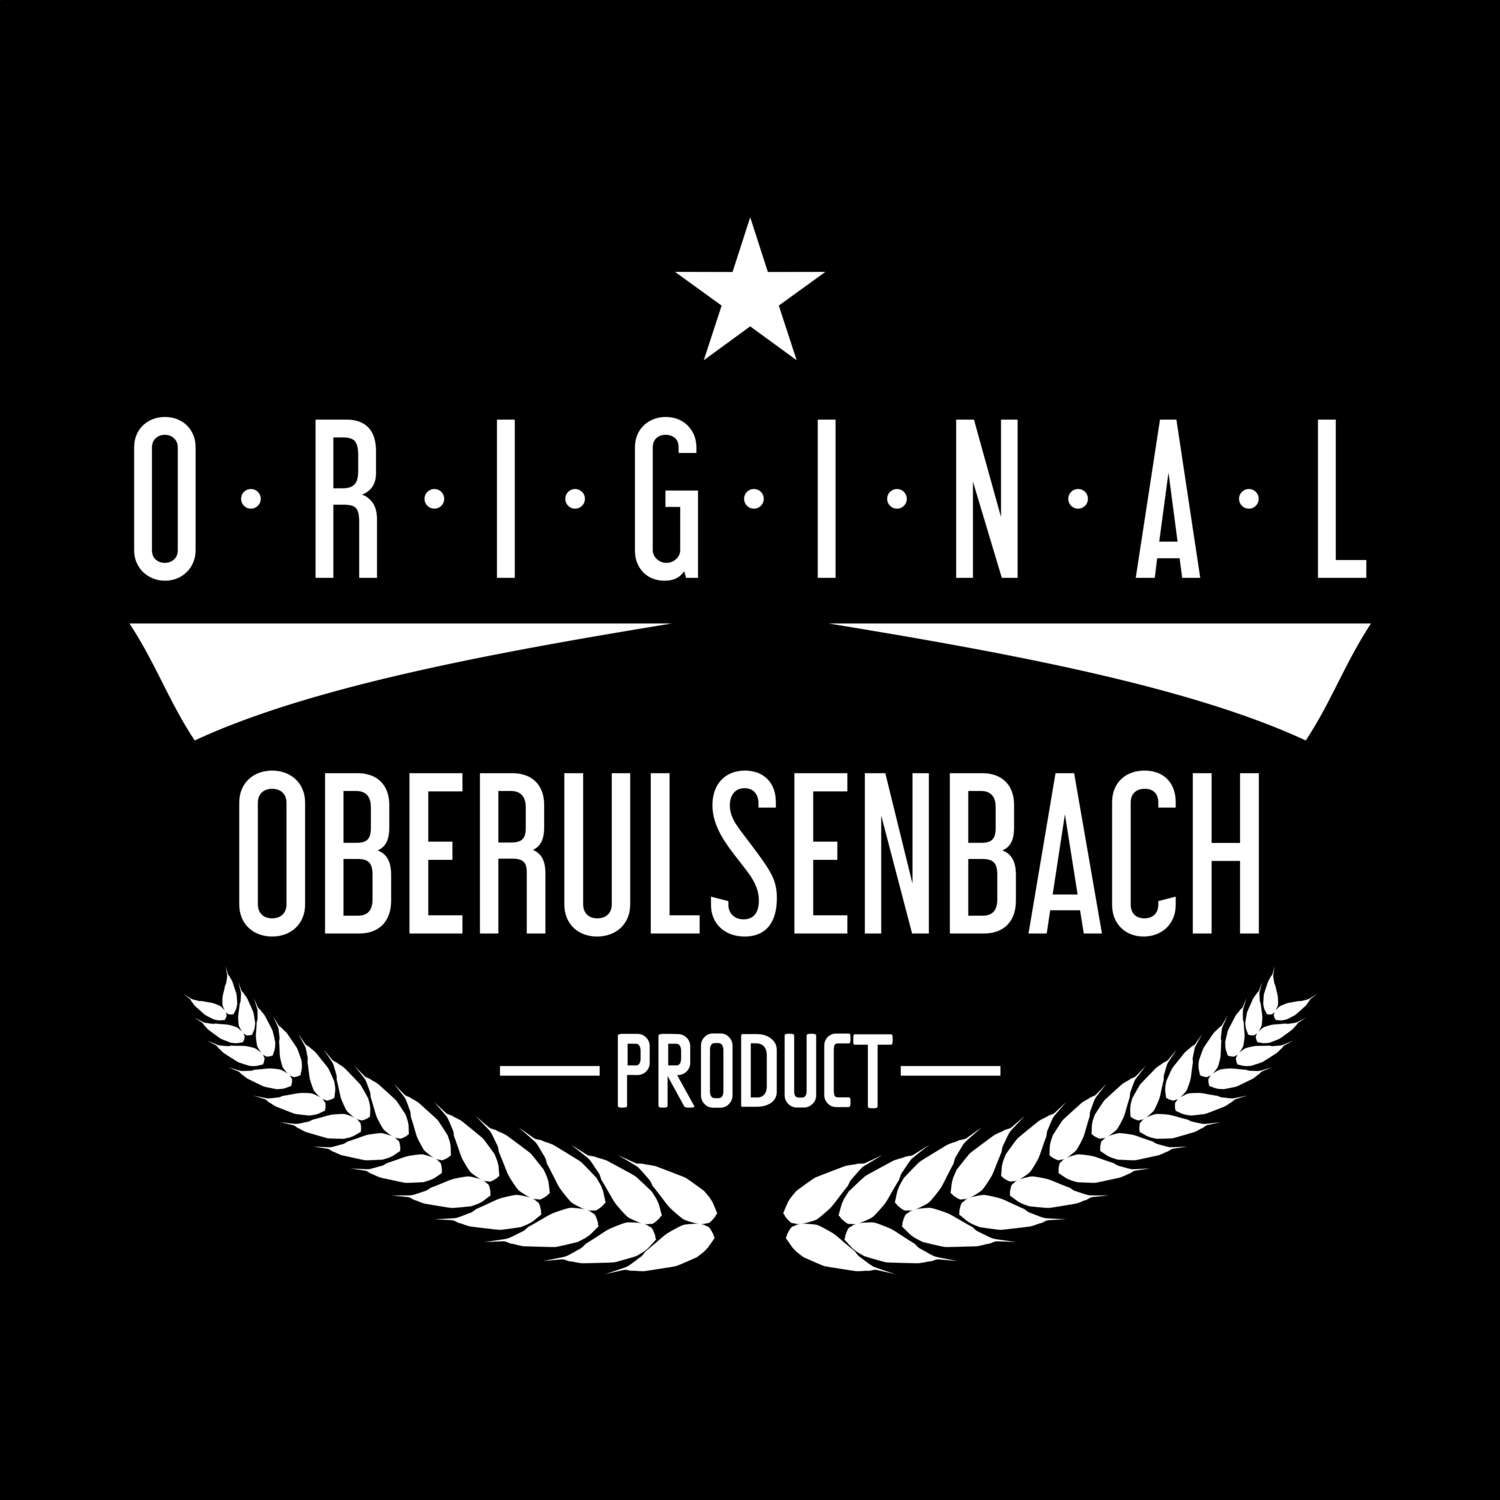 Oberulsenbach T-Shirt »Original Product«